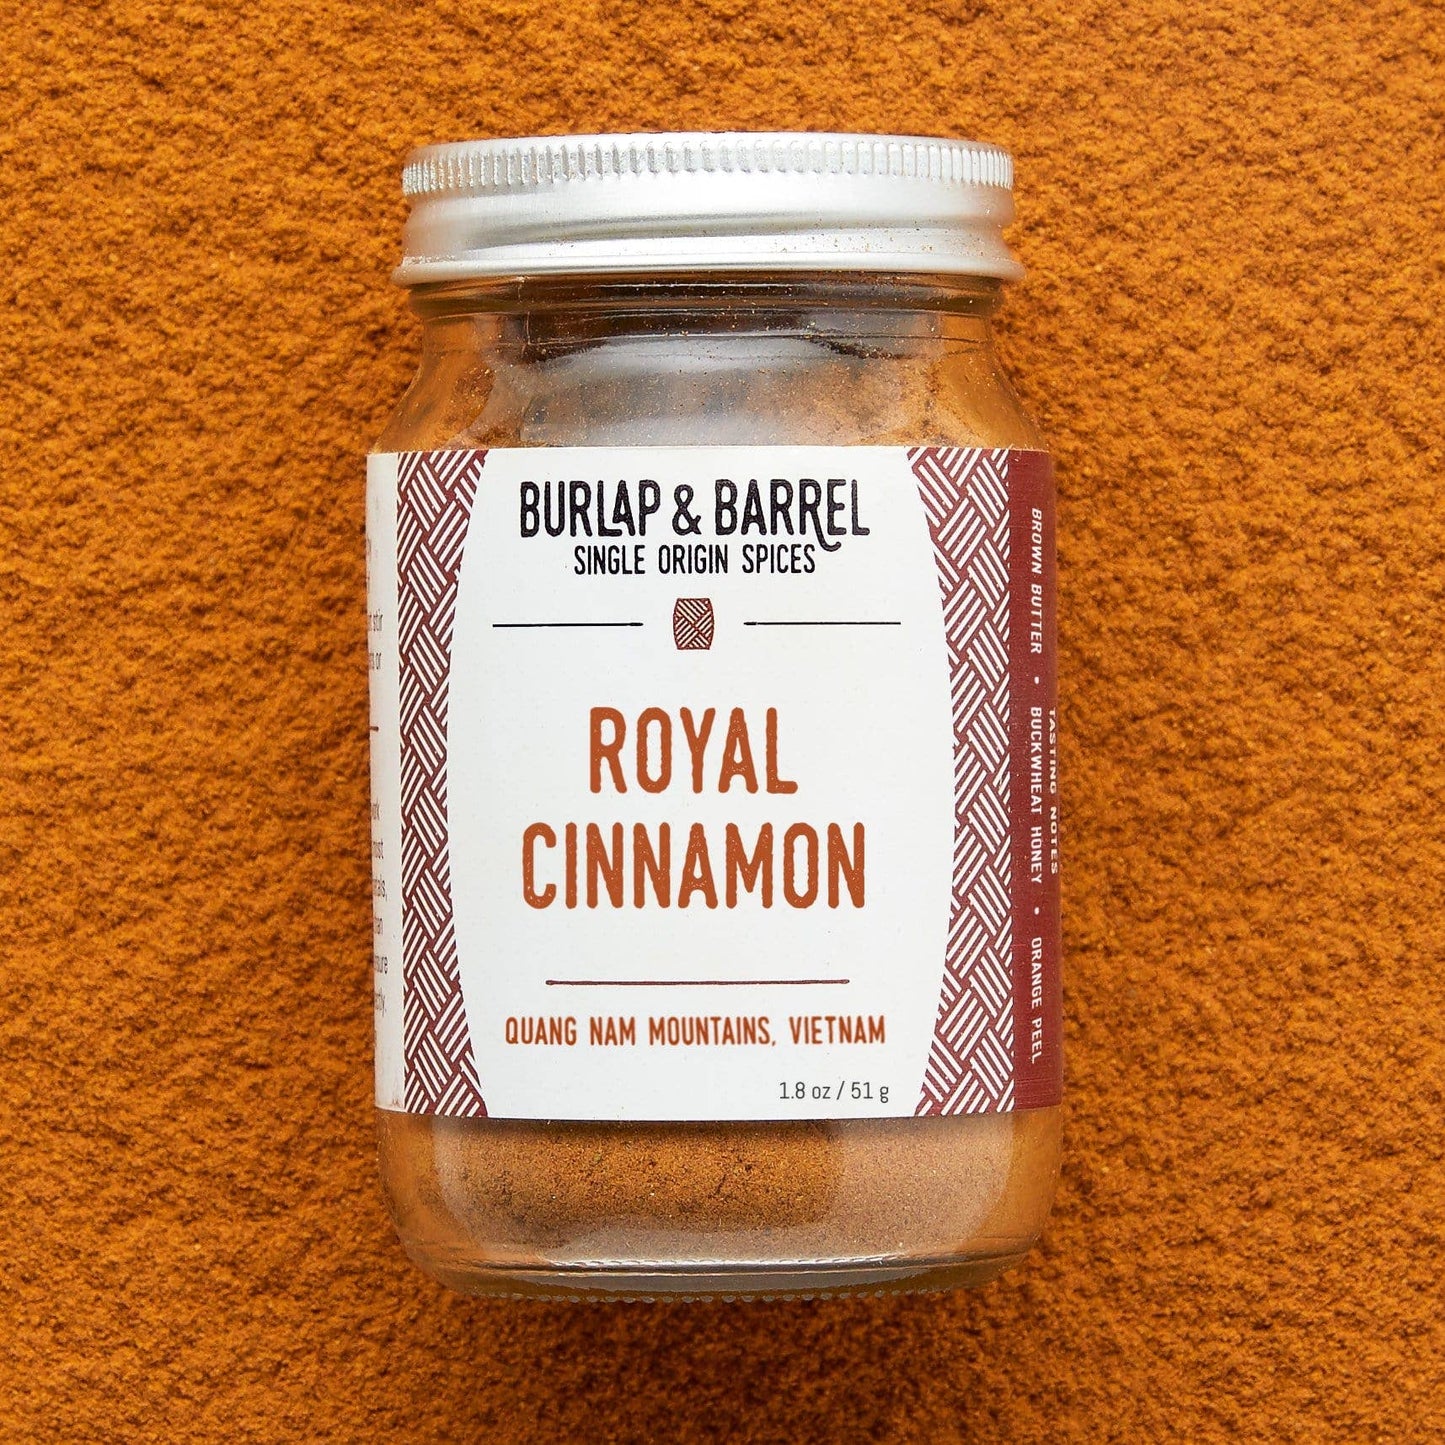 Burlap & Barrel - Royal Cinnamon (Saigon cinnamon, Vietnamese cinnamon) Spice: 1.8 oz glass jar